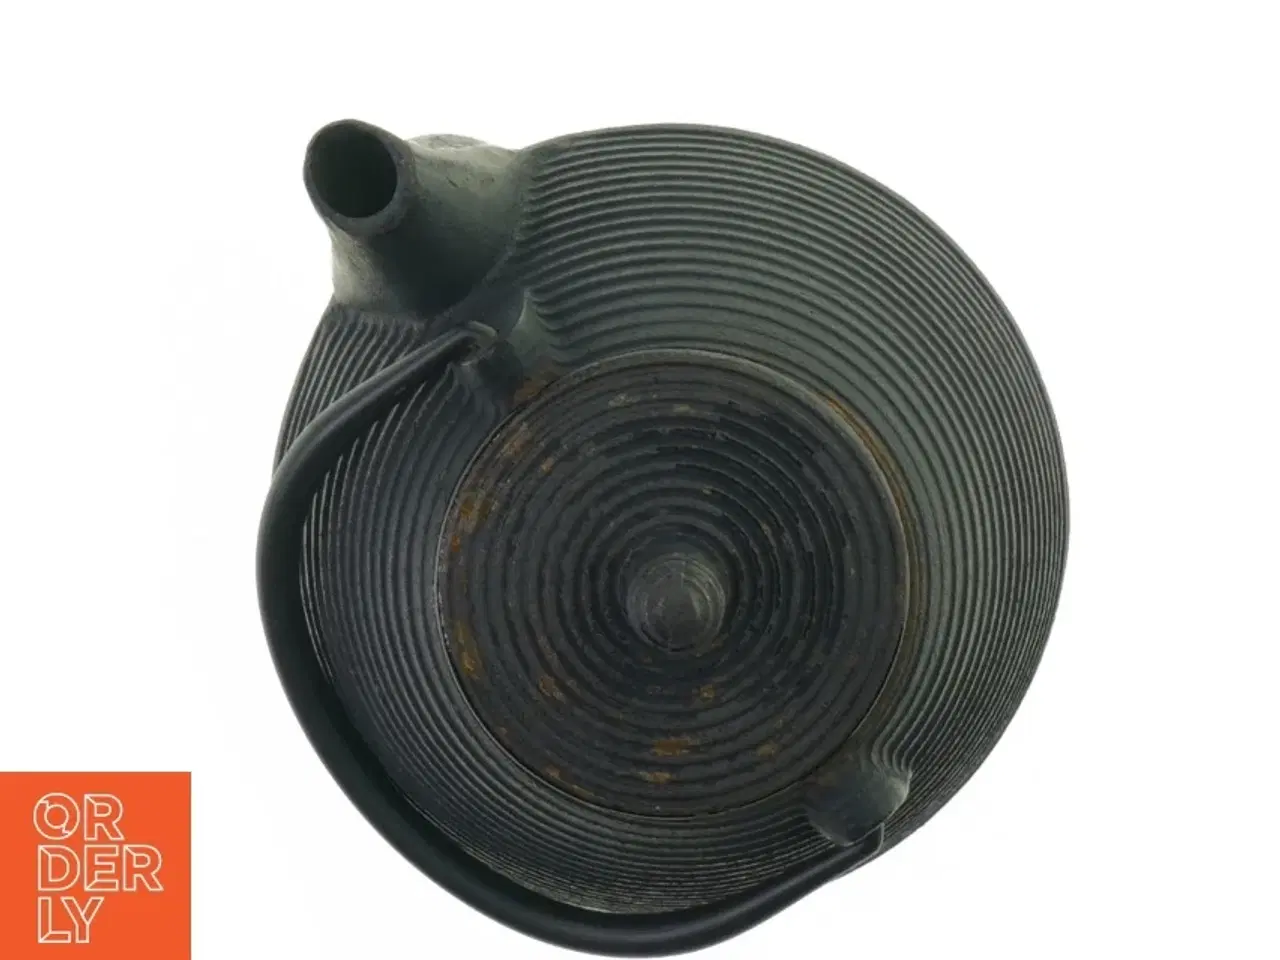 Billede 3 - Støbejern te kande (str. 15 x 10 cm)